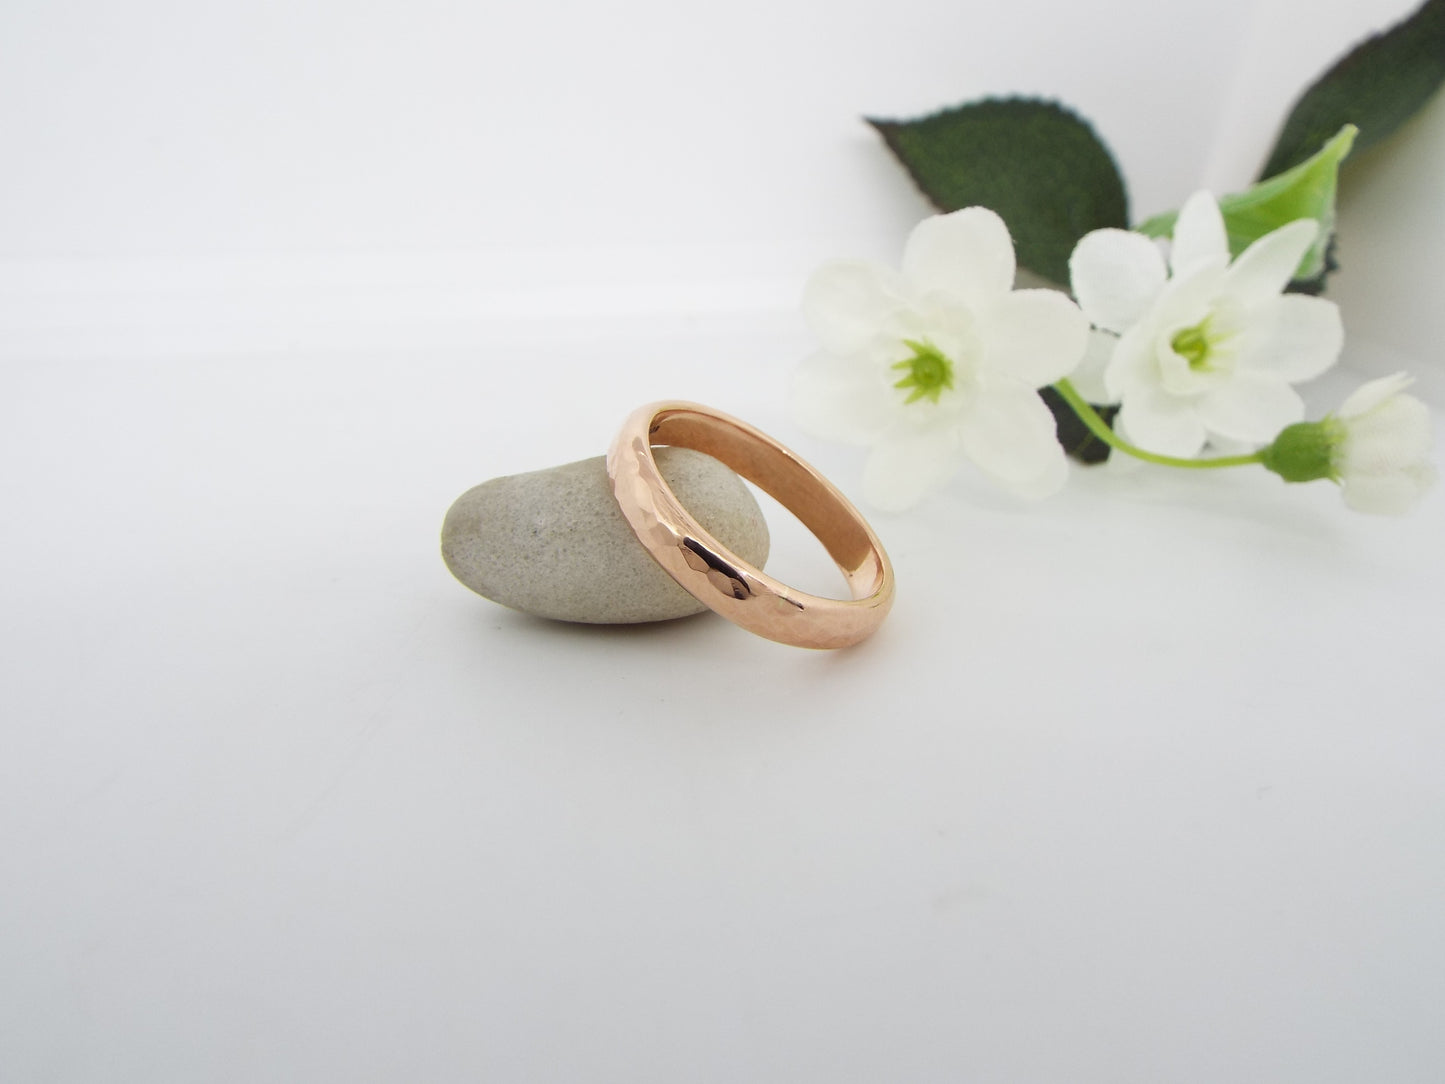 Hammered Rose Gold - Wide Wedding Ring